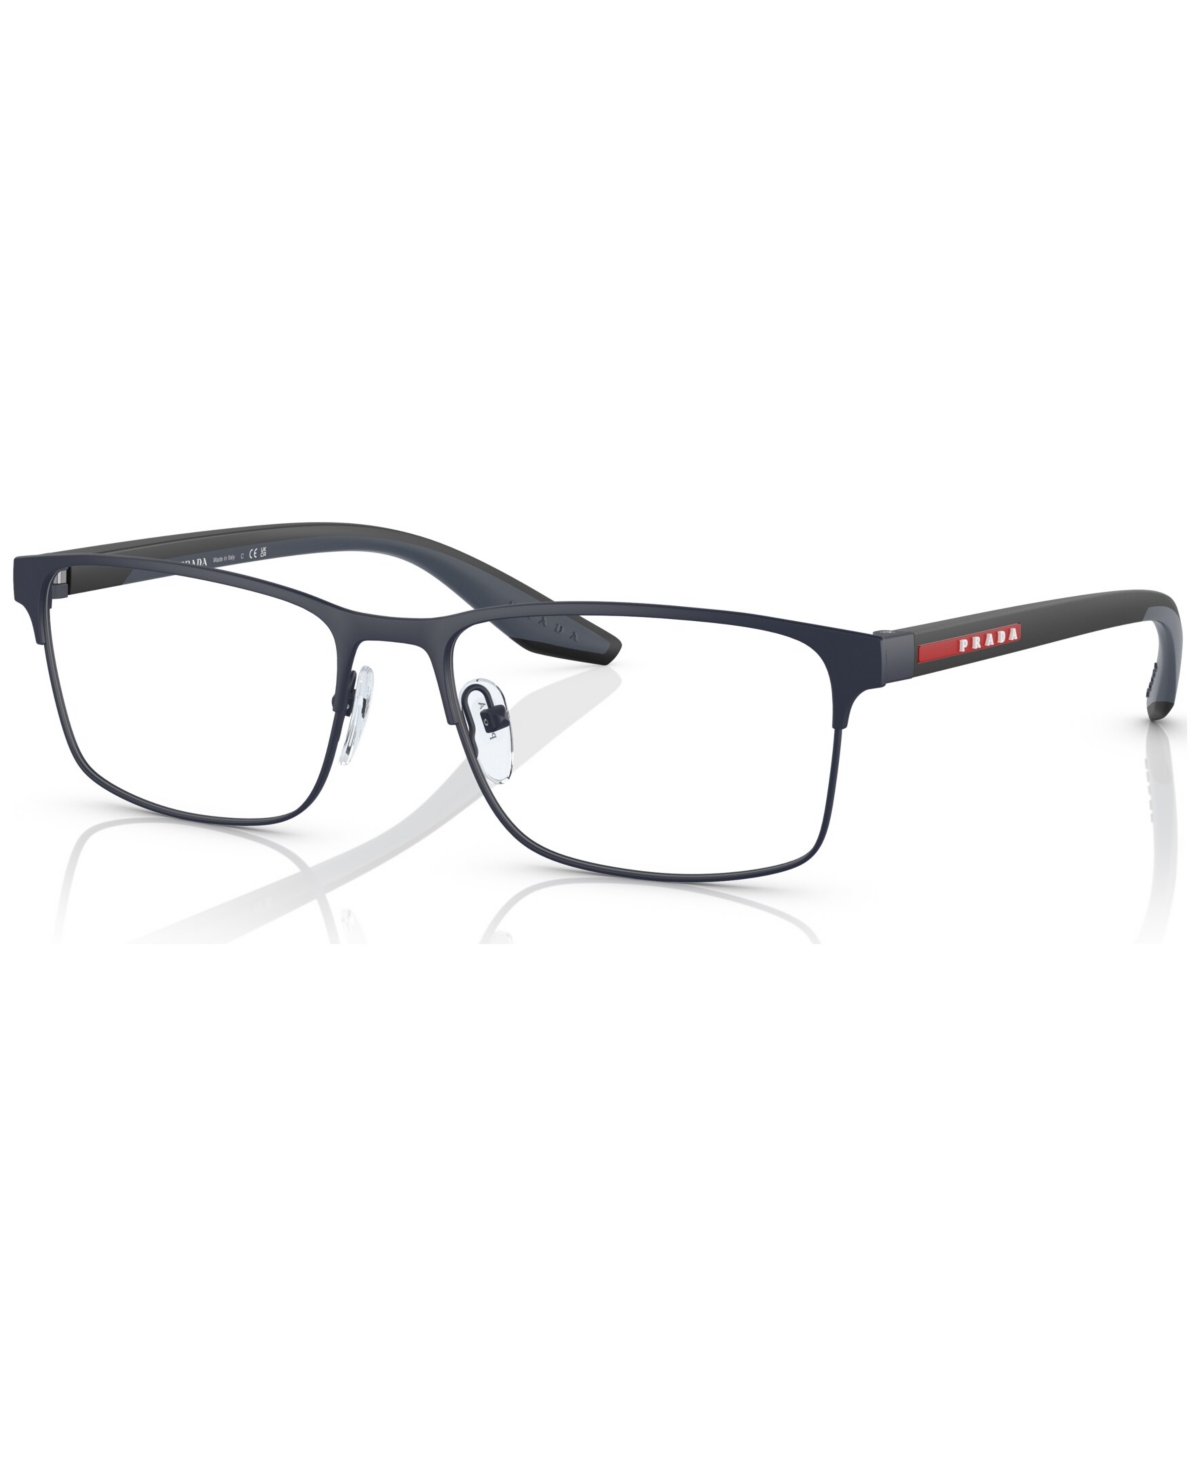 Men's Rectangle Eyeglasses, Ps 50PV57-o - Black, Silver-Tone